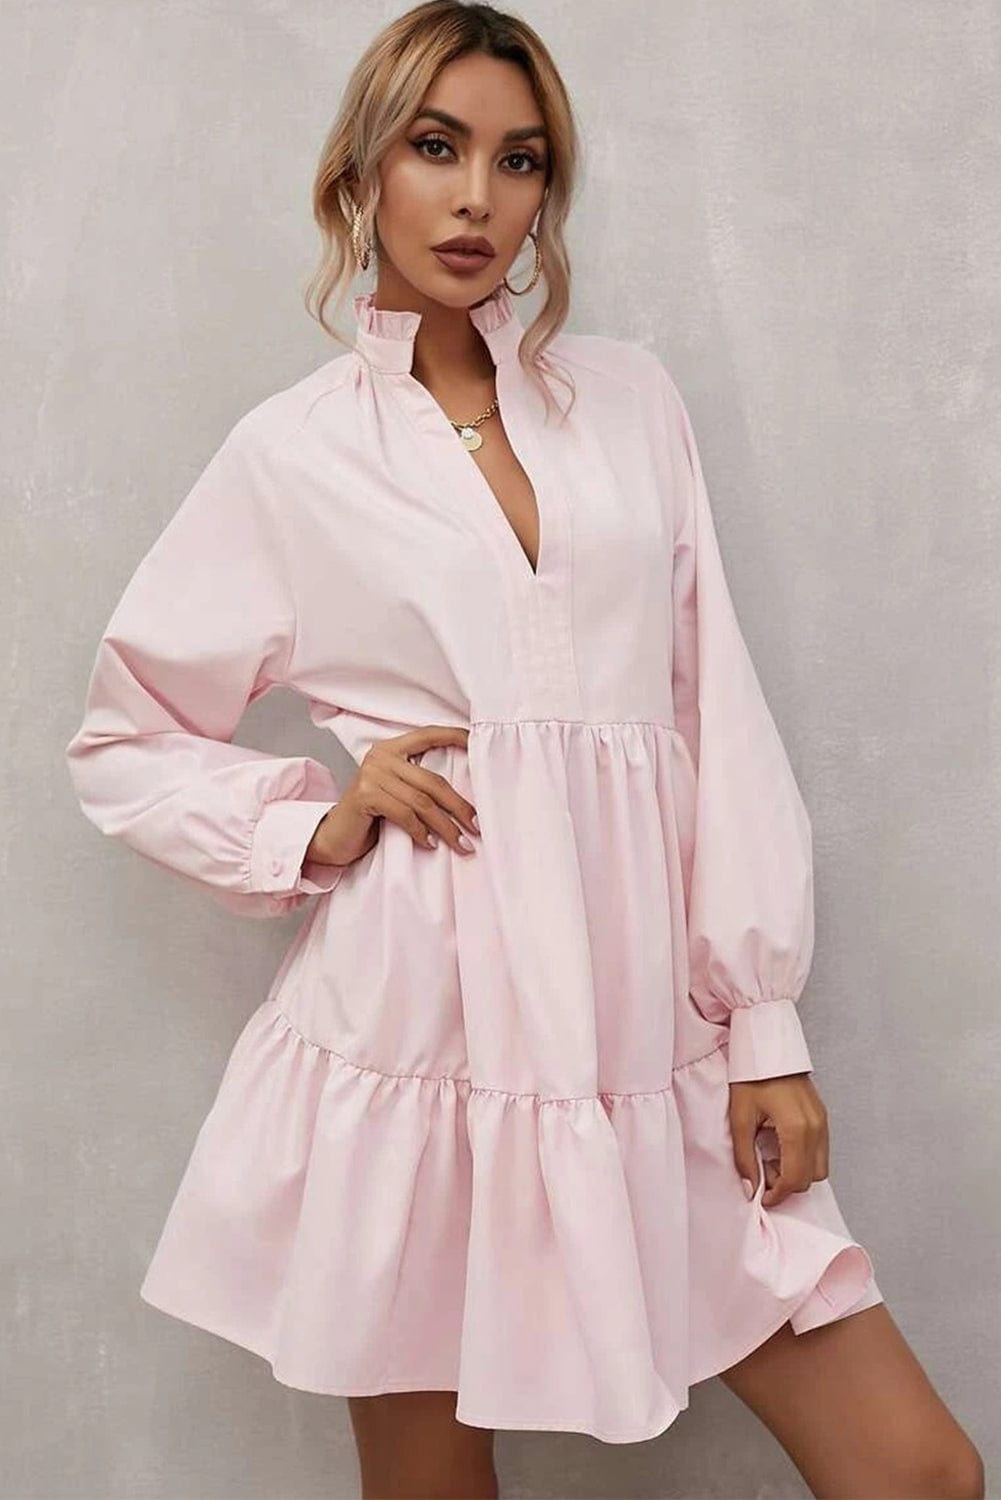 Shoppe EZR Dresses Pink Frilled Stand Collar Long Sleeve Ruffle Dress